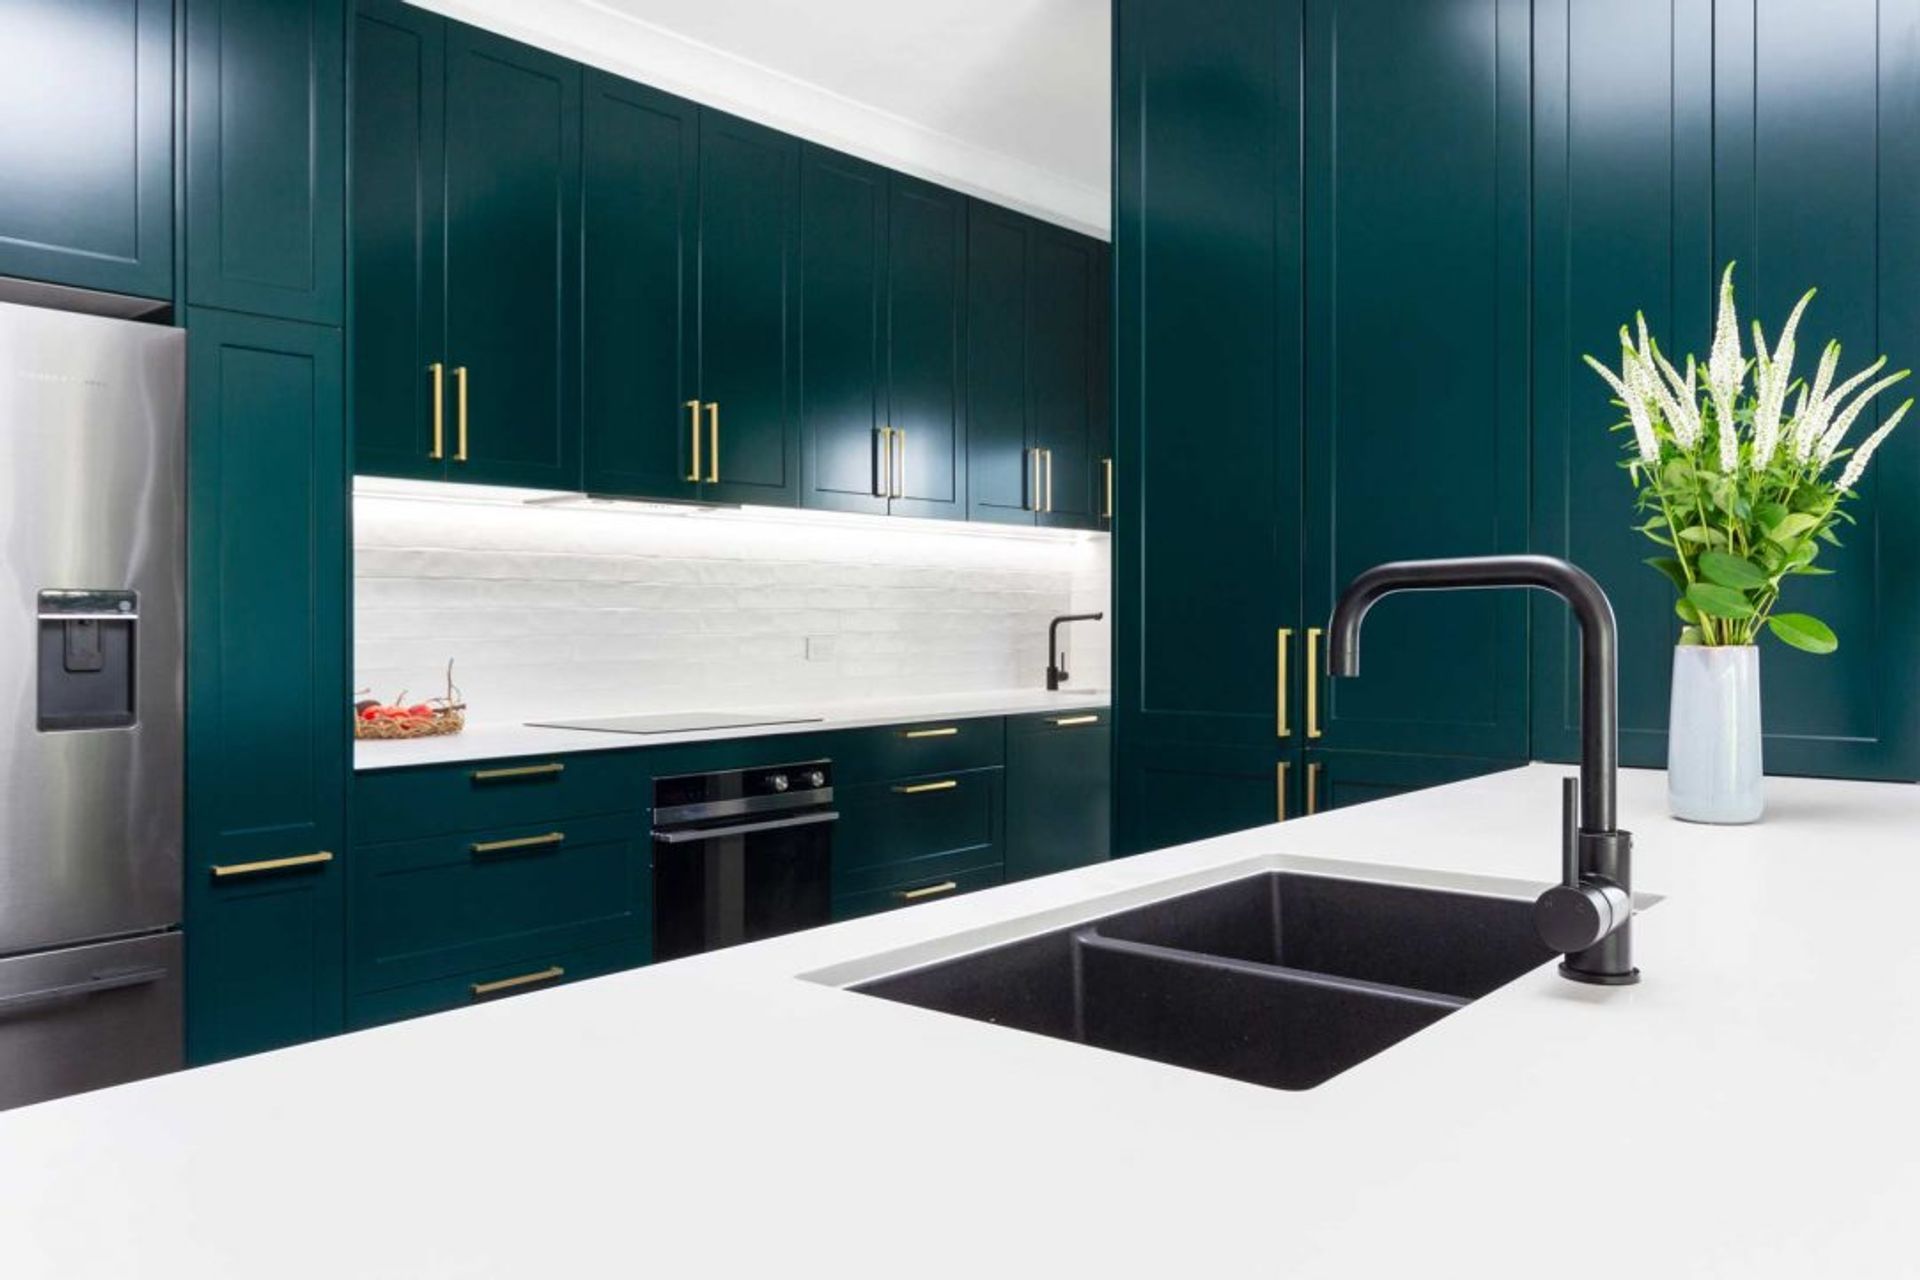 caesarstone-kitchen-design-sydney-green-white-luxury-premier-kitchens-statuario-maximus-01-1084x723.jpg